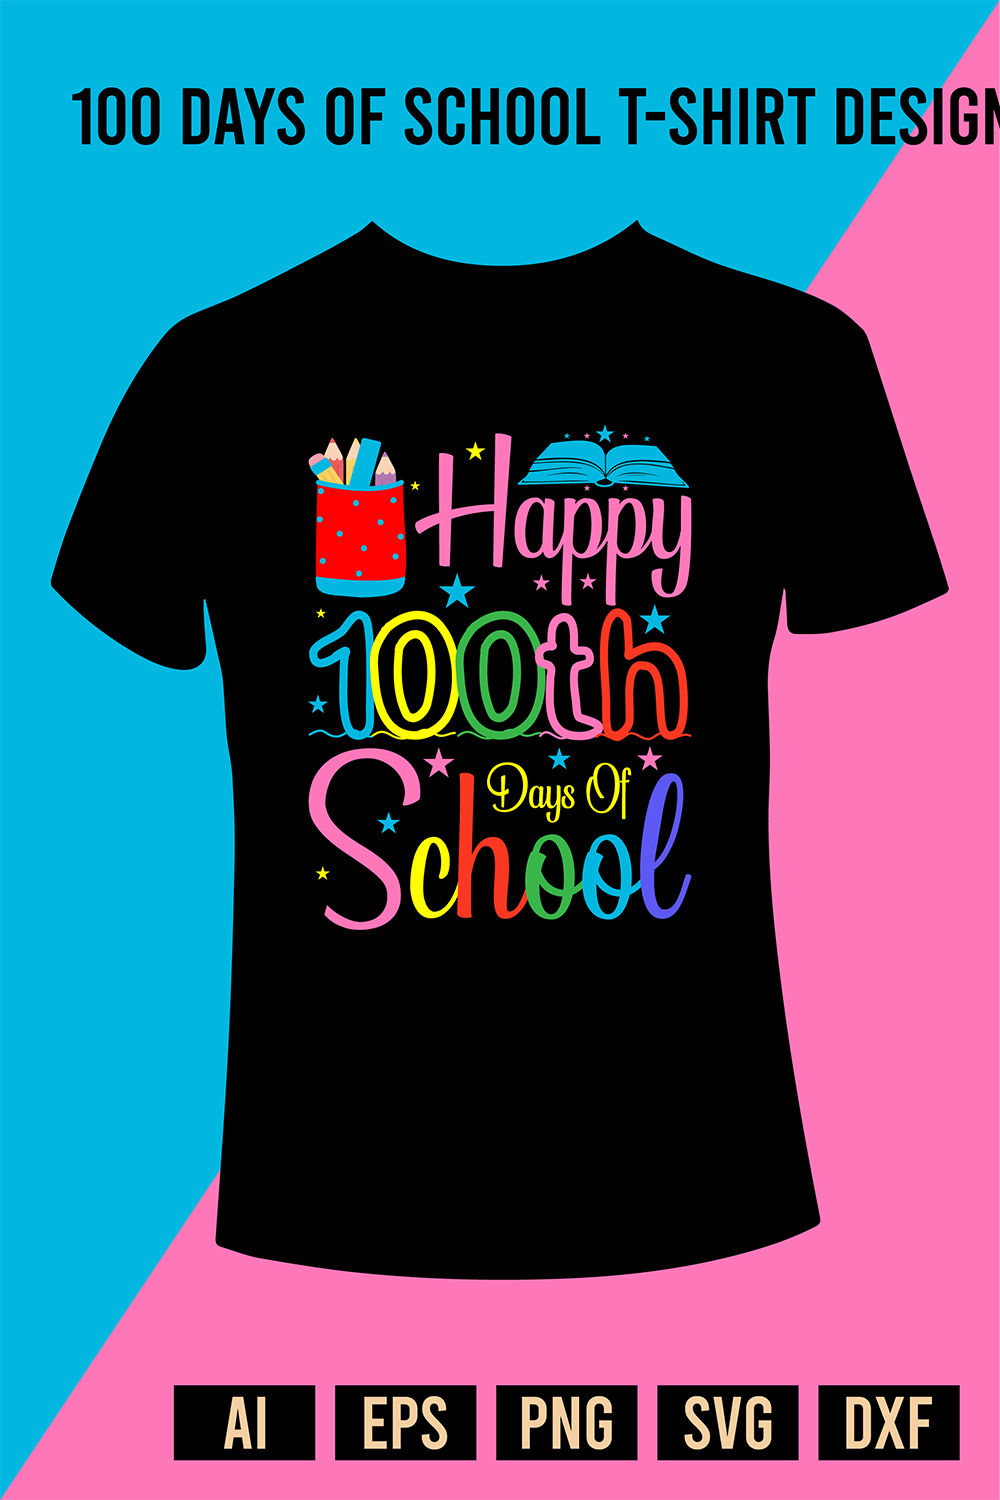 100 Days Of School T-Shirt Design pinterest preview image.